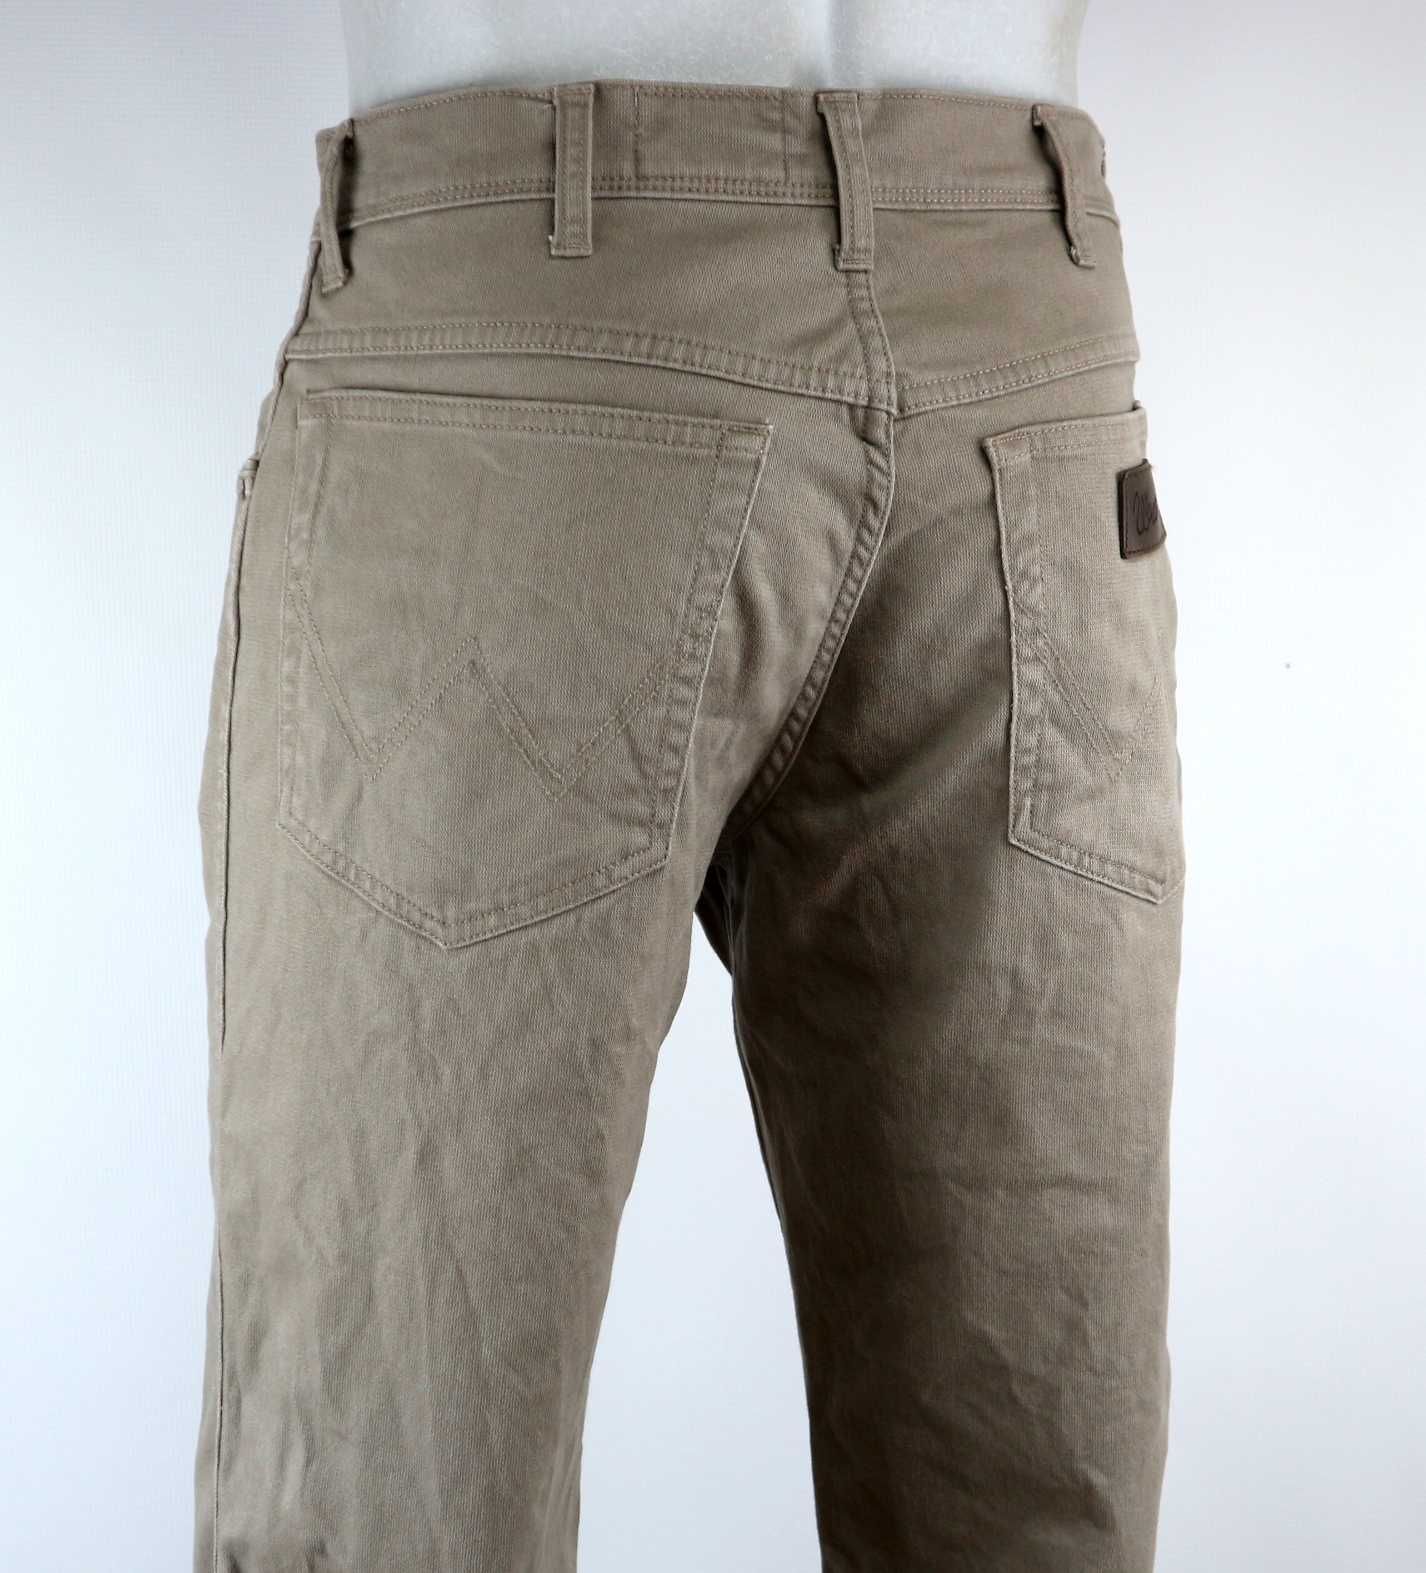 Wrangler Texas Stretch spodnie jeansy W33 L30 pas 2 x 42 cm